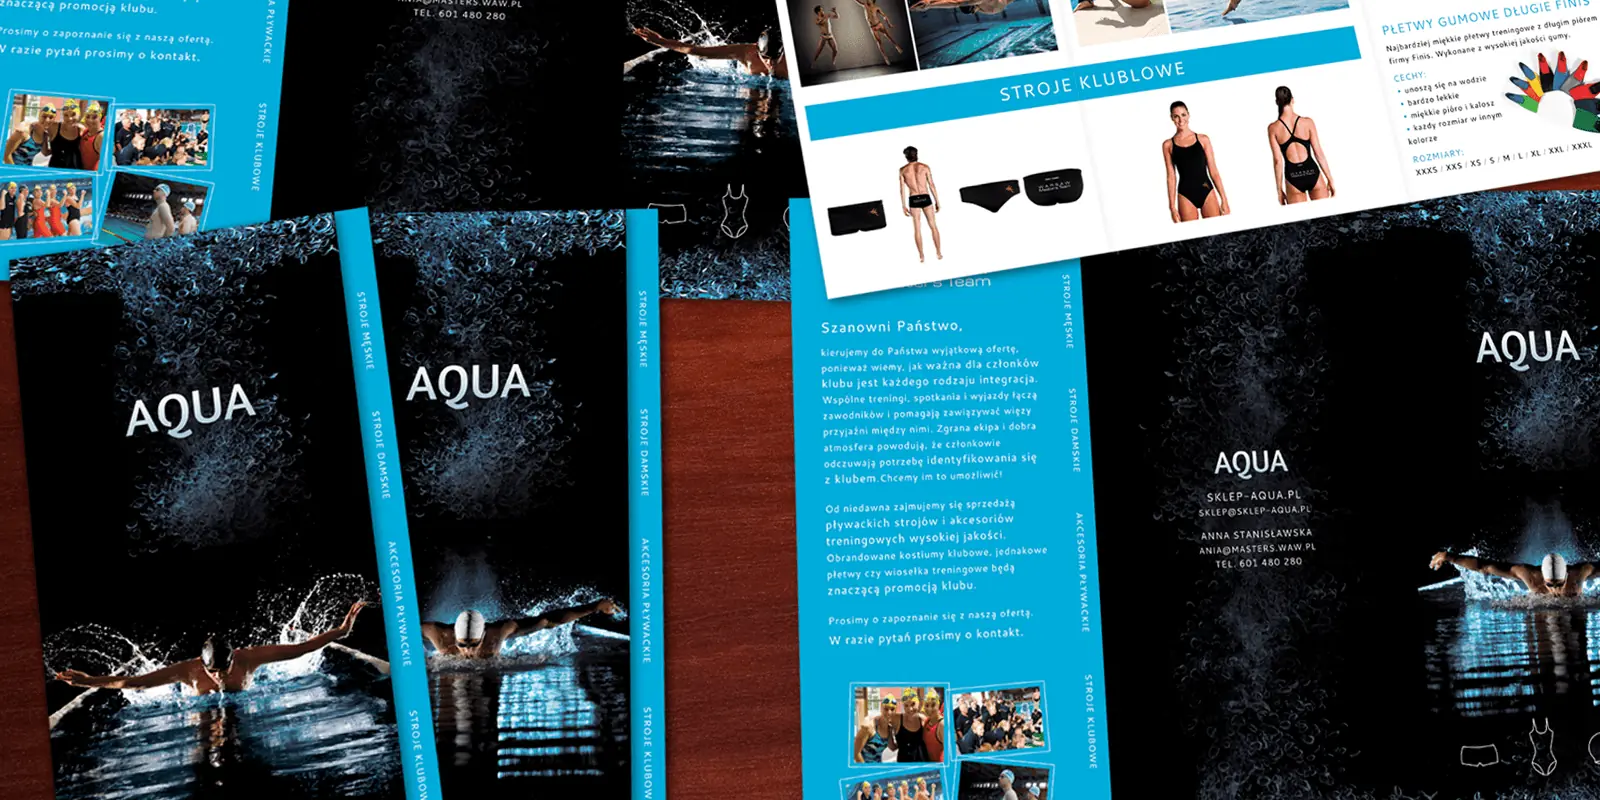 Aqua Image 2